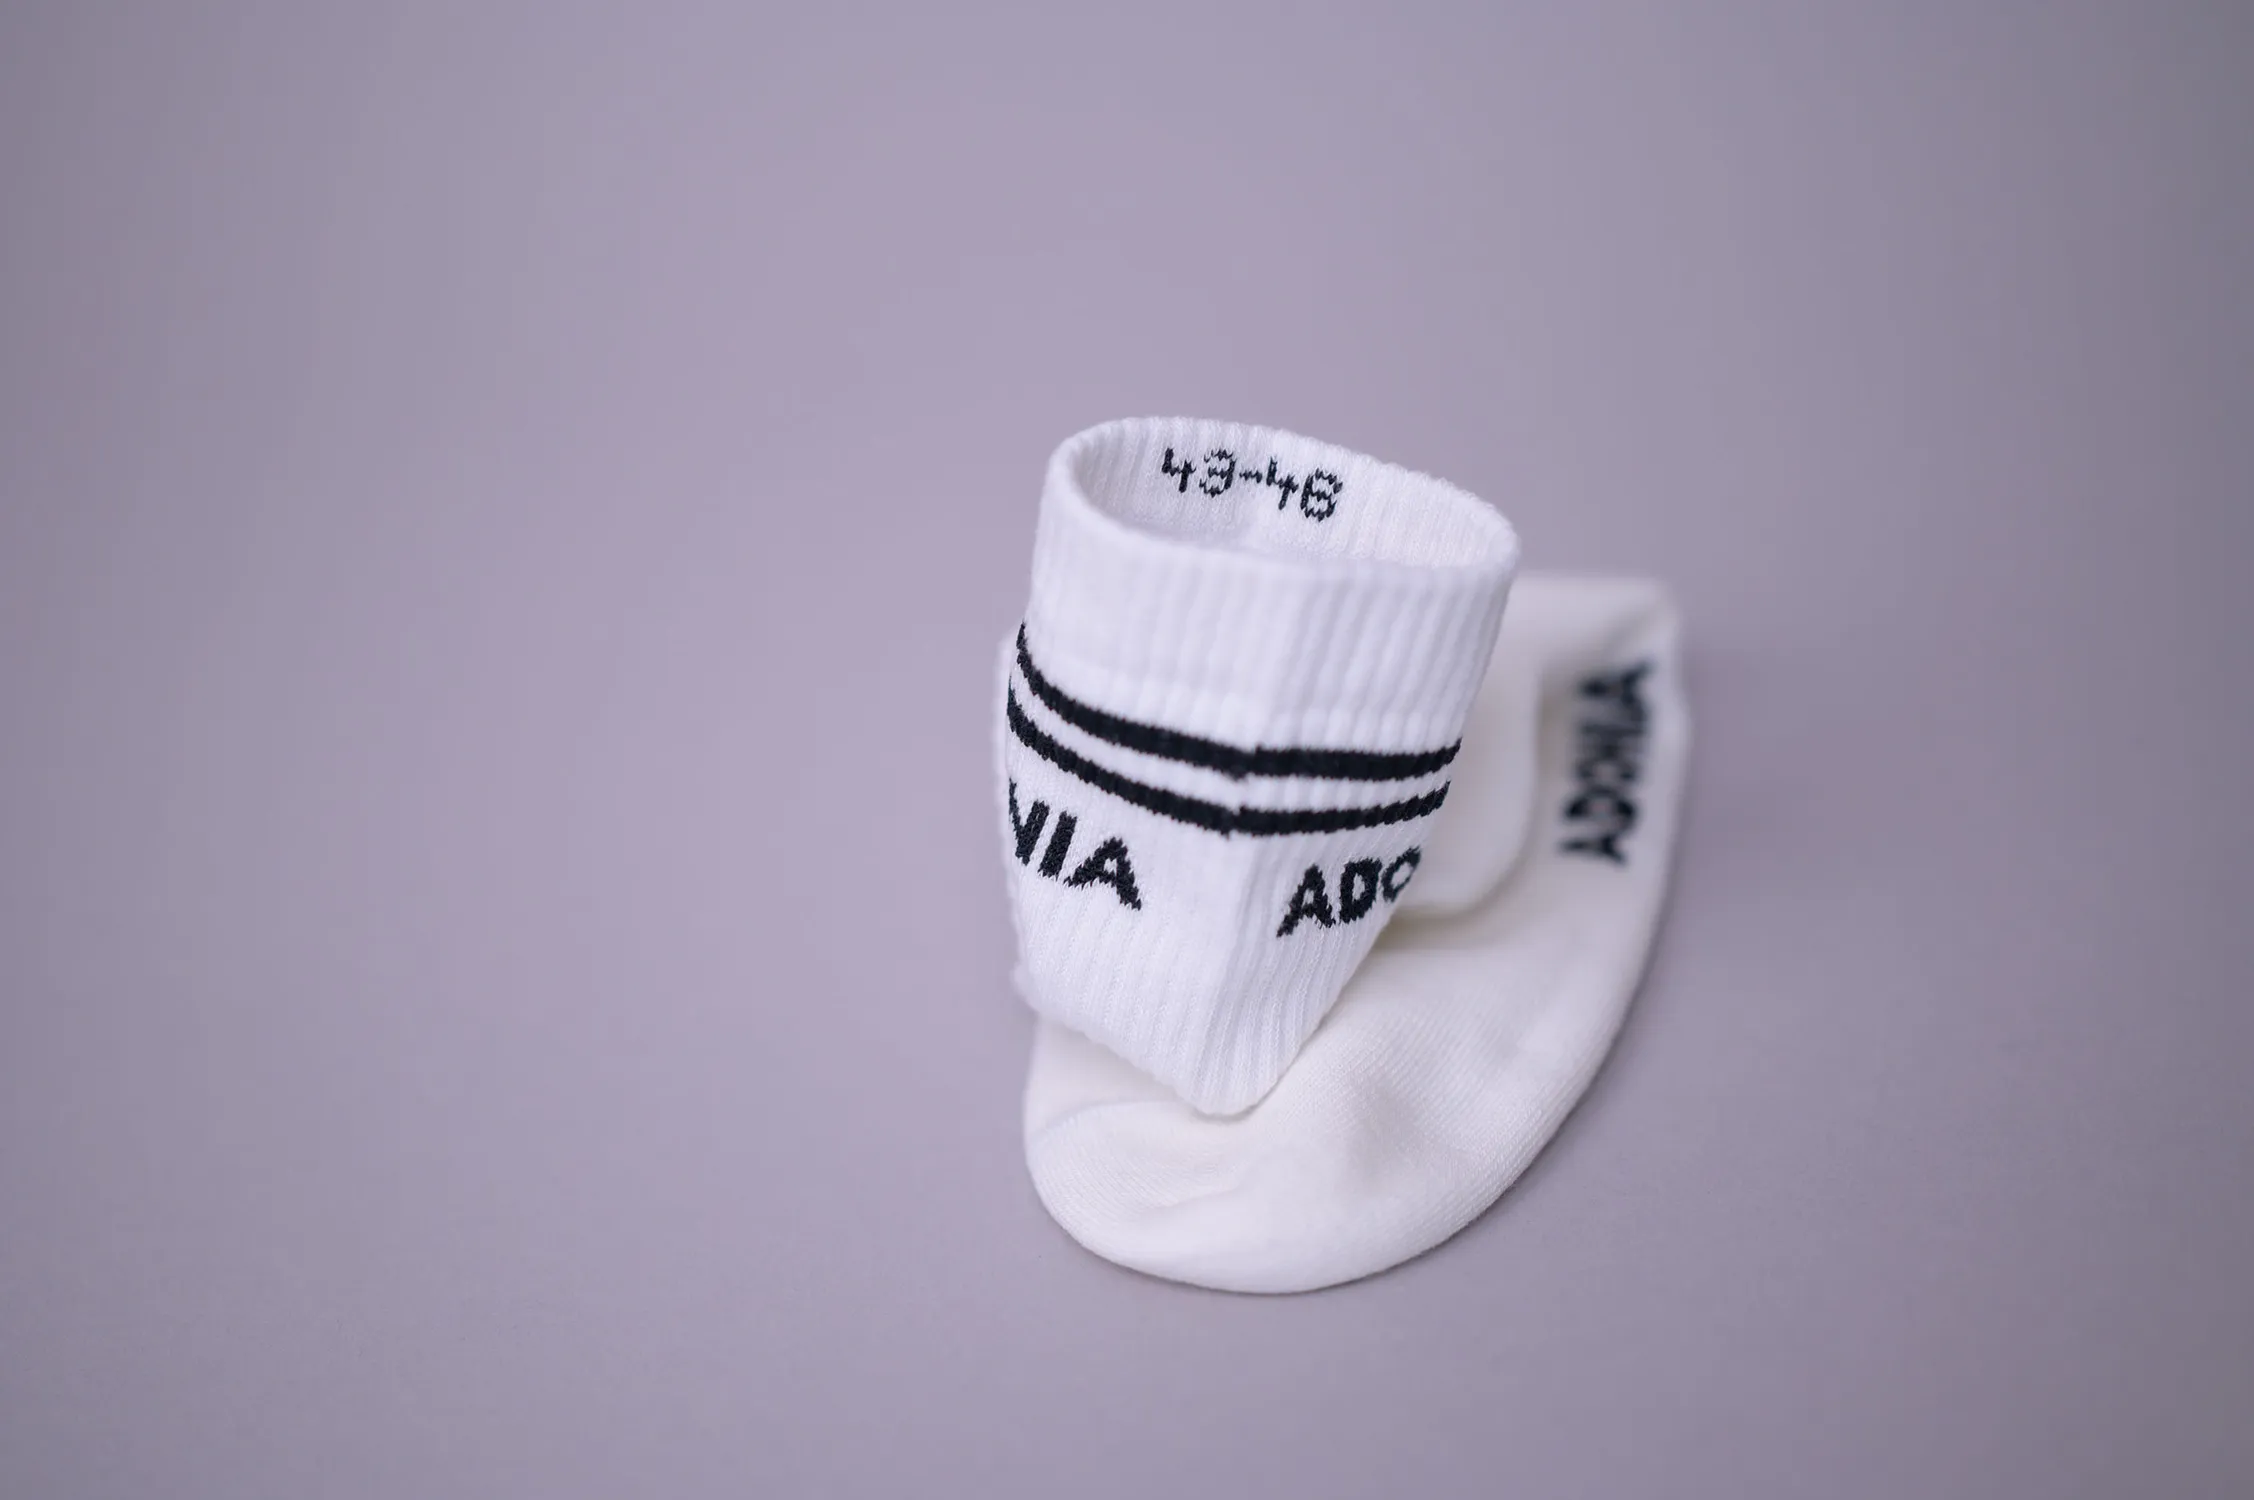 Adonia Streifen Socken - Duopack